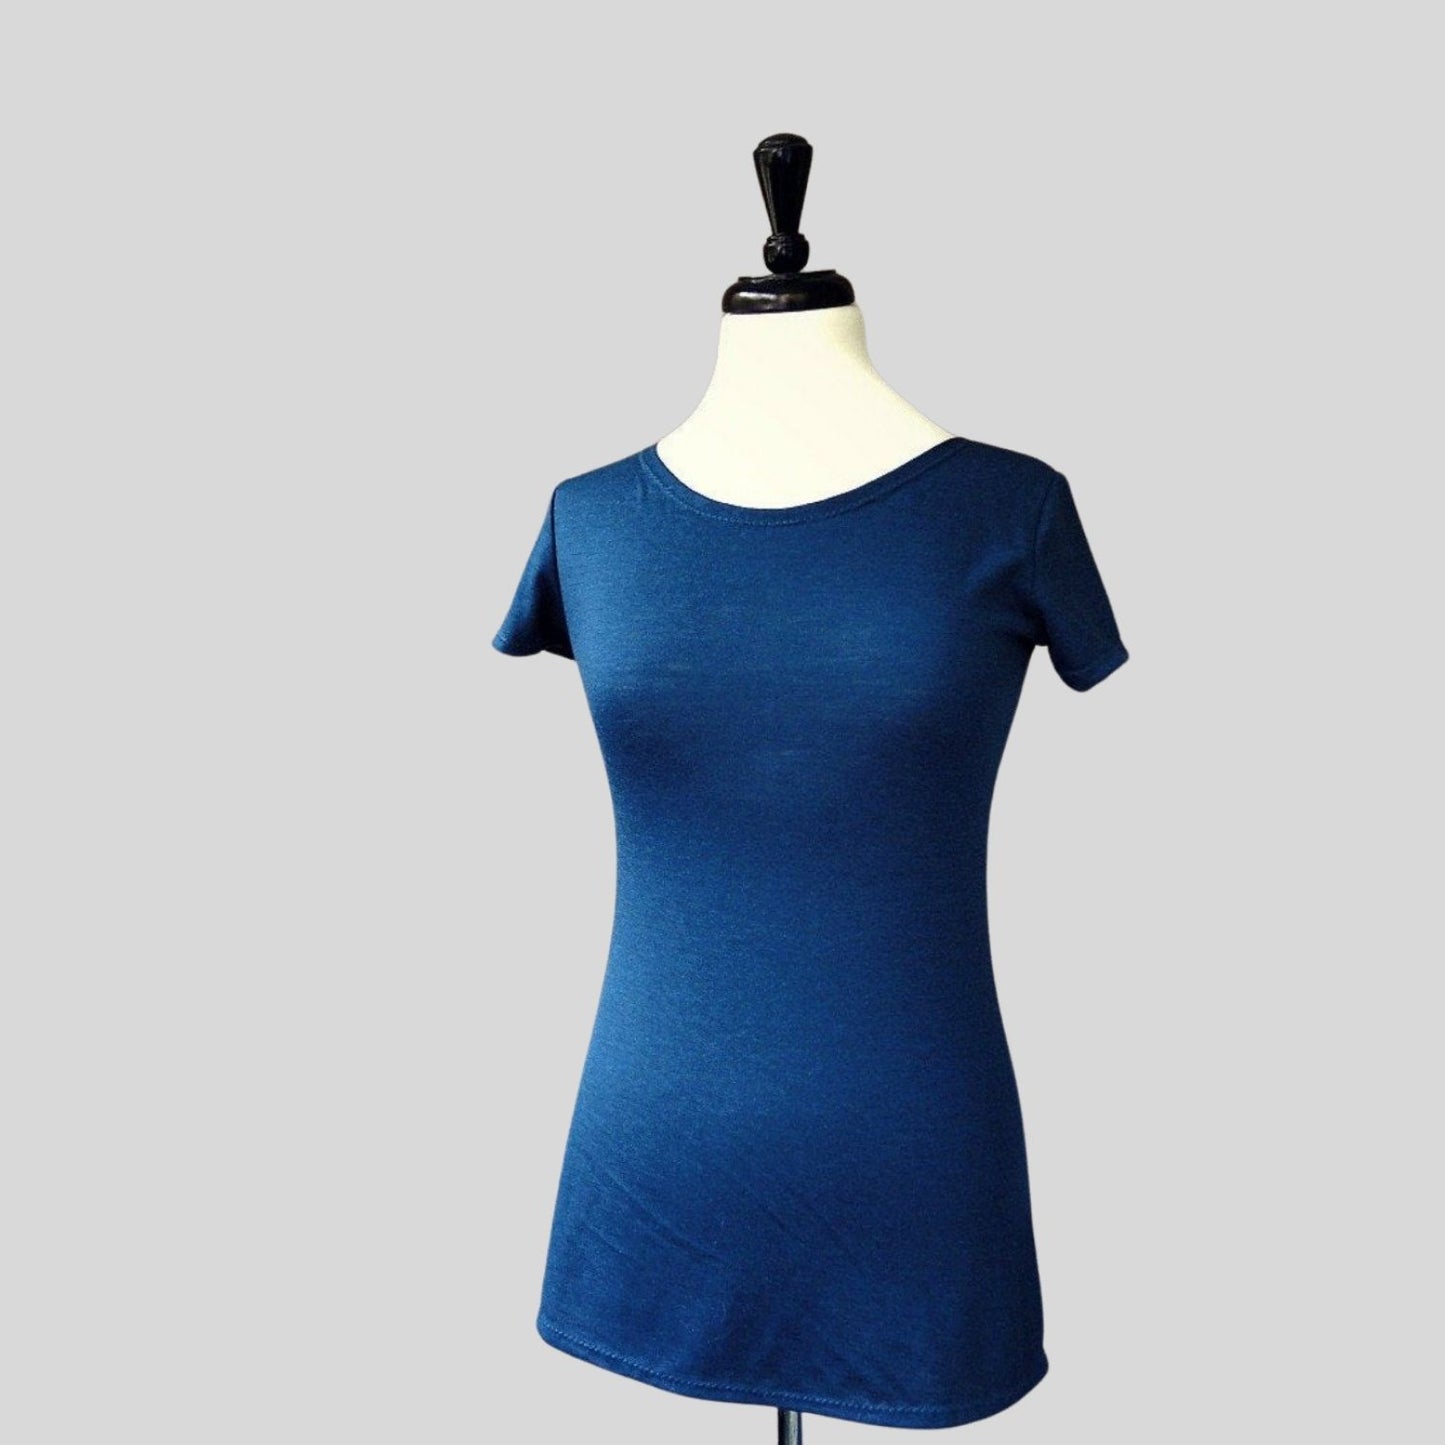 Blue merino wool tee shirt | Long top in merino wool | Made in Canada merino wool + organic cotton tops and tee shirts for women | Econica